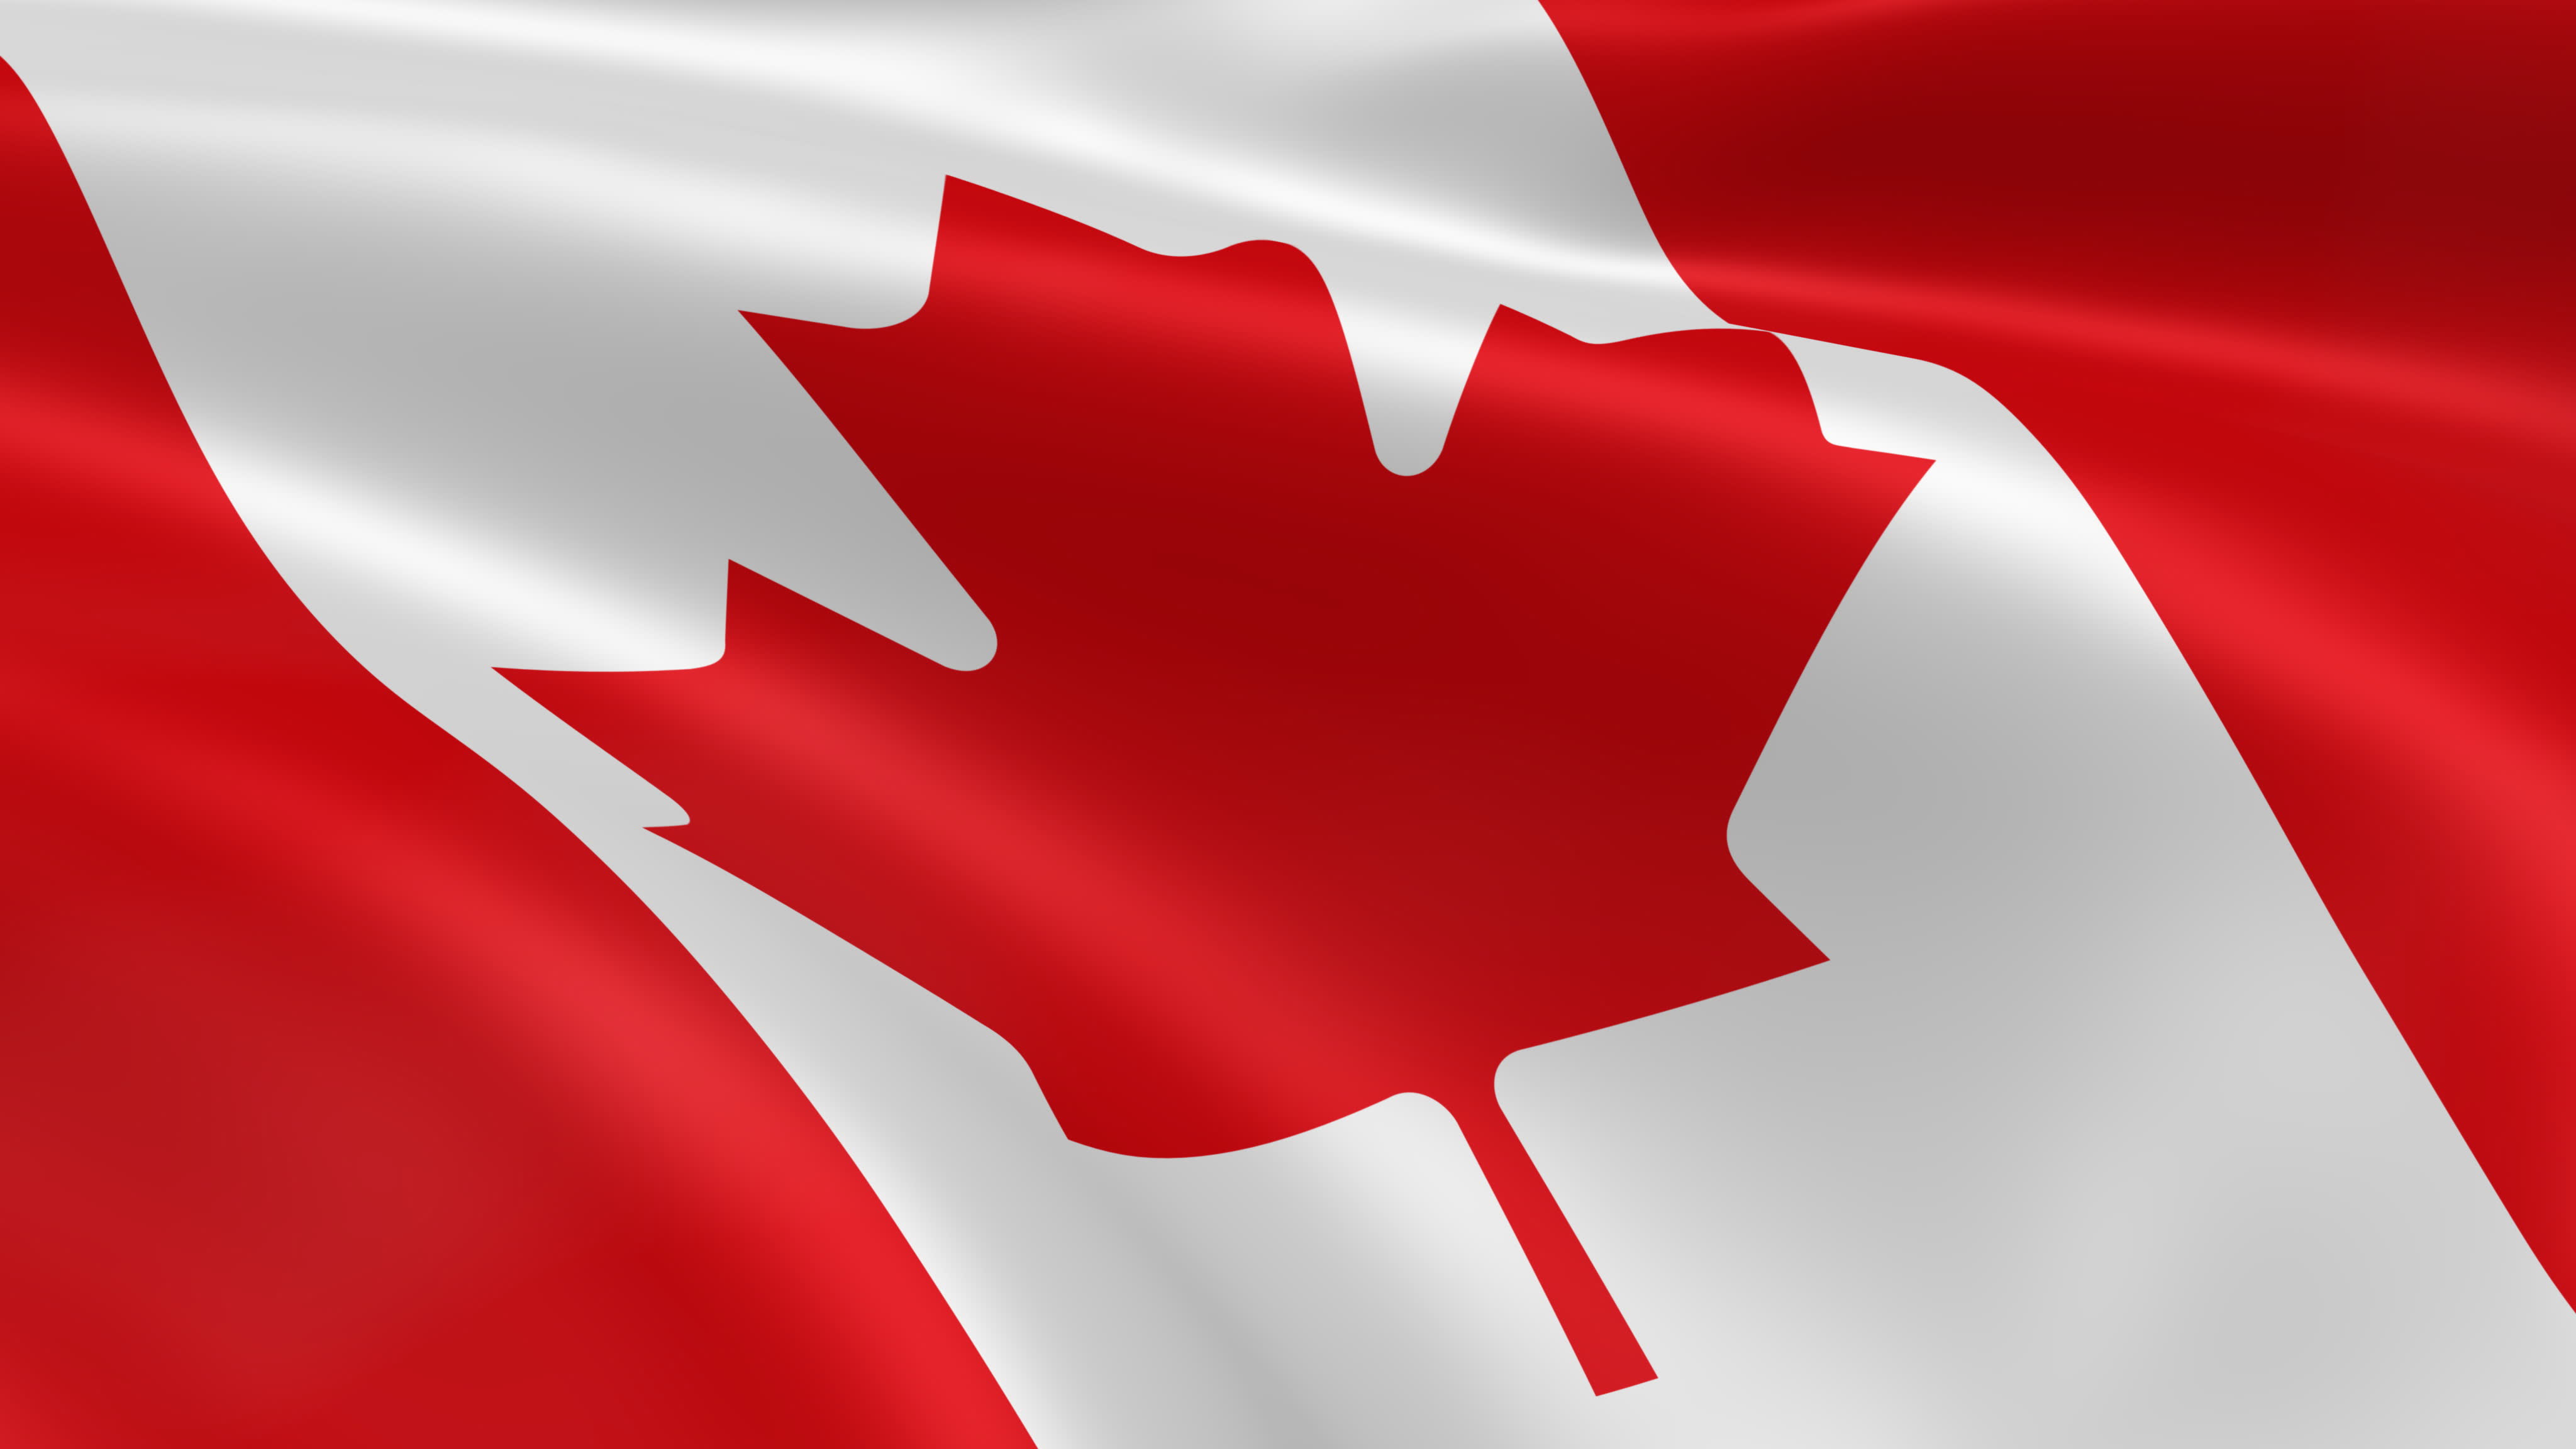 Canada Day Flags WhatsApp Dp Facebook Profile